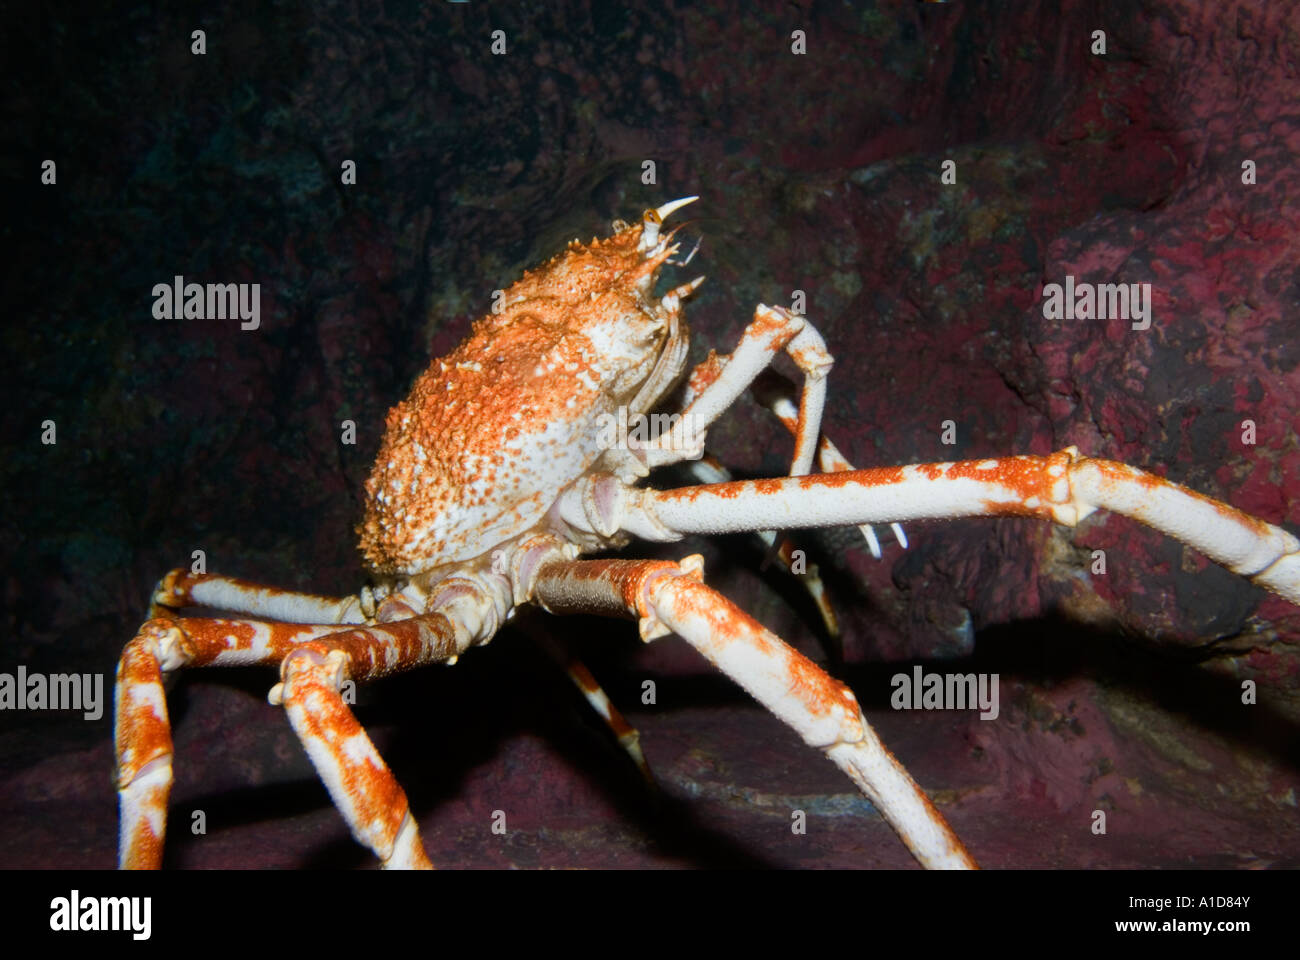 The largest crab alive GIANT SPIDER GRAB  macrocheira kaempferi japanese japan PACIFIC OCEAN SEA Stock Photo